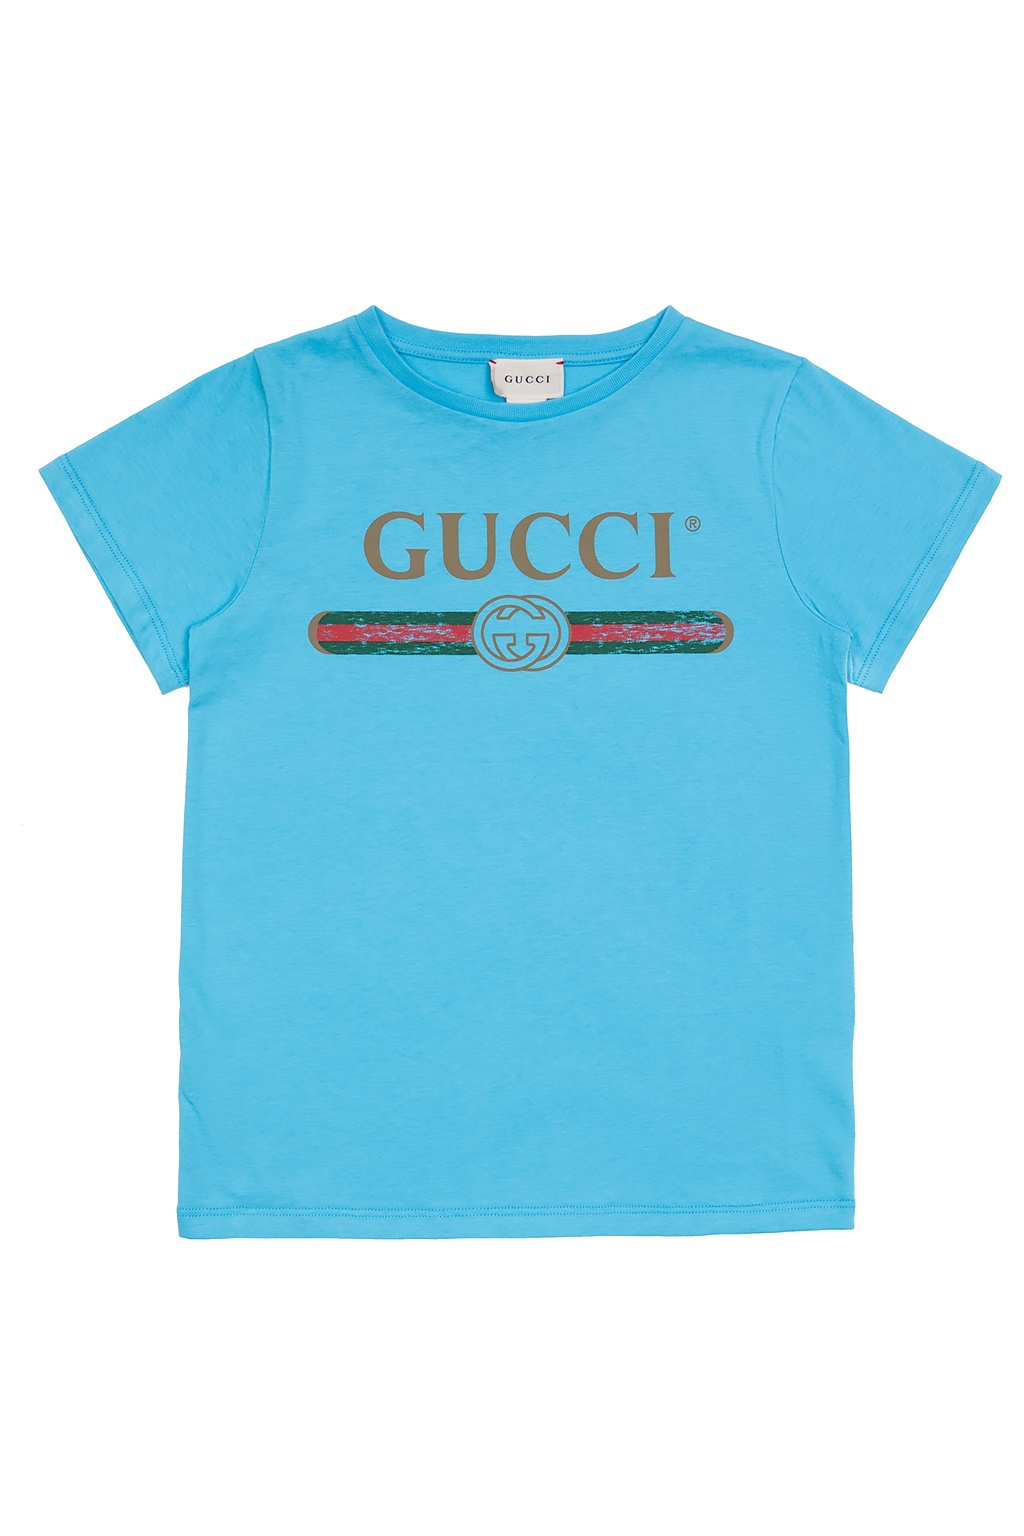 gucci children's t shirt